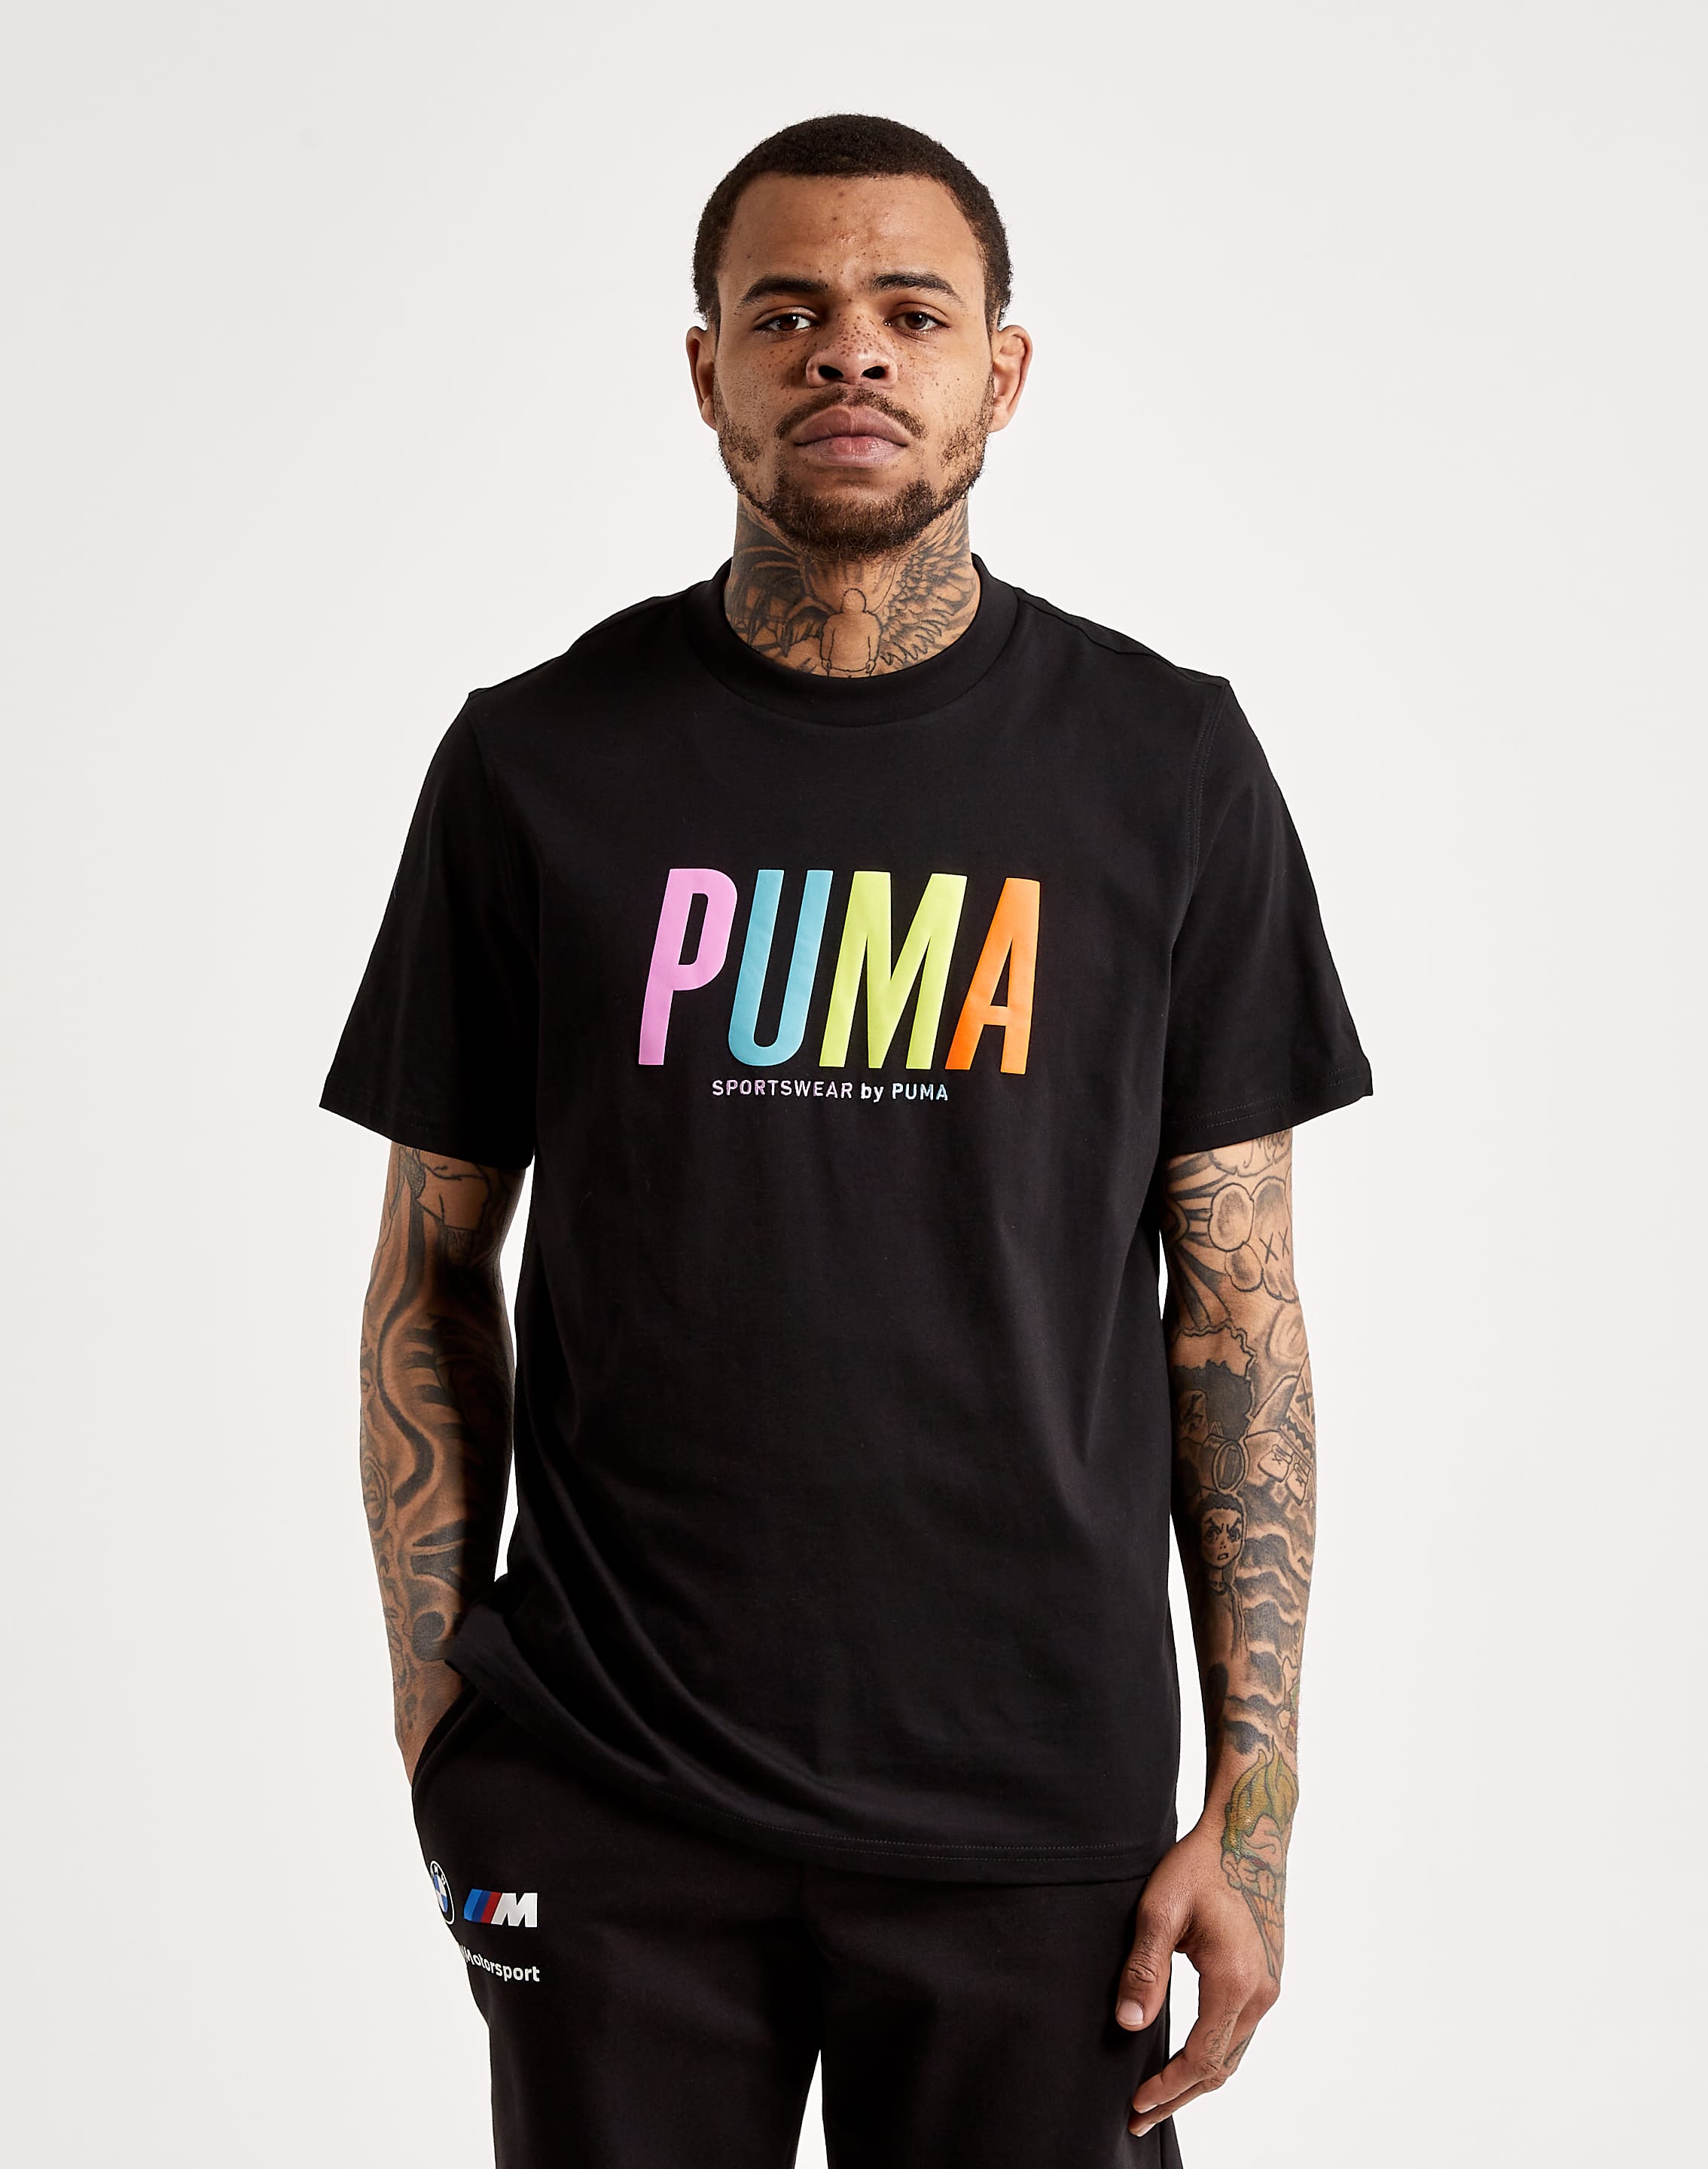 Puma Sportswear By Puma Graphic – Tee DTLR